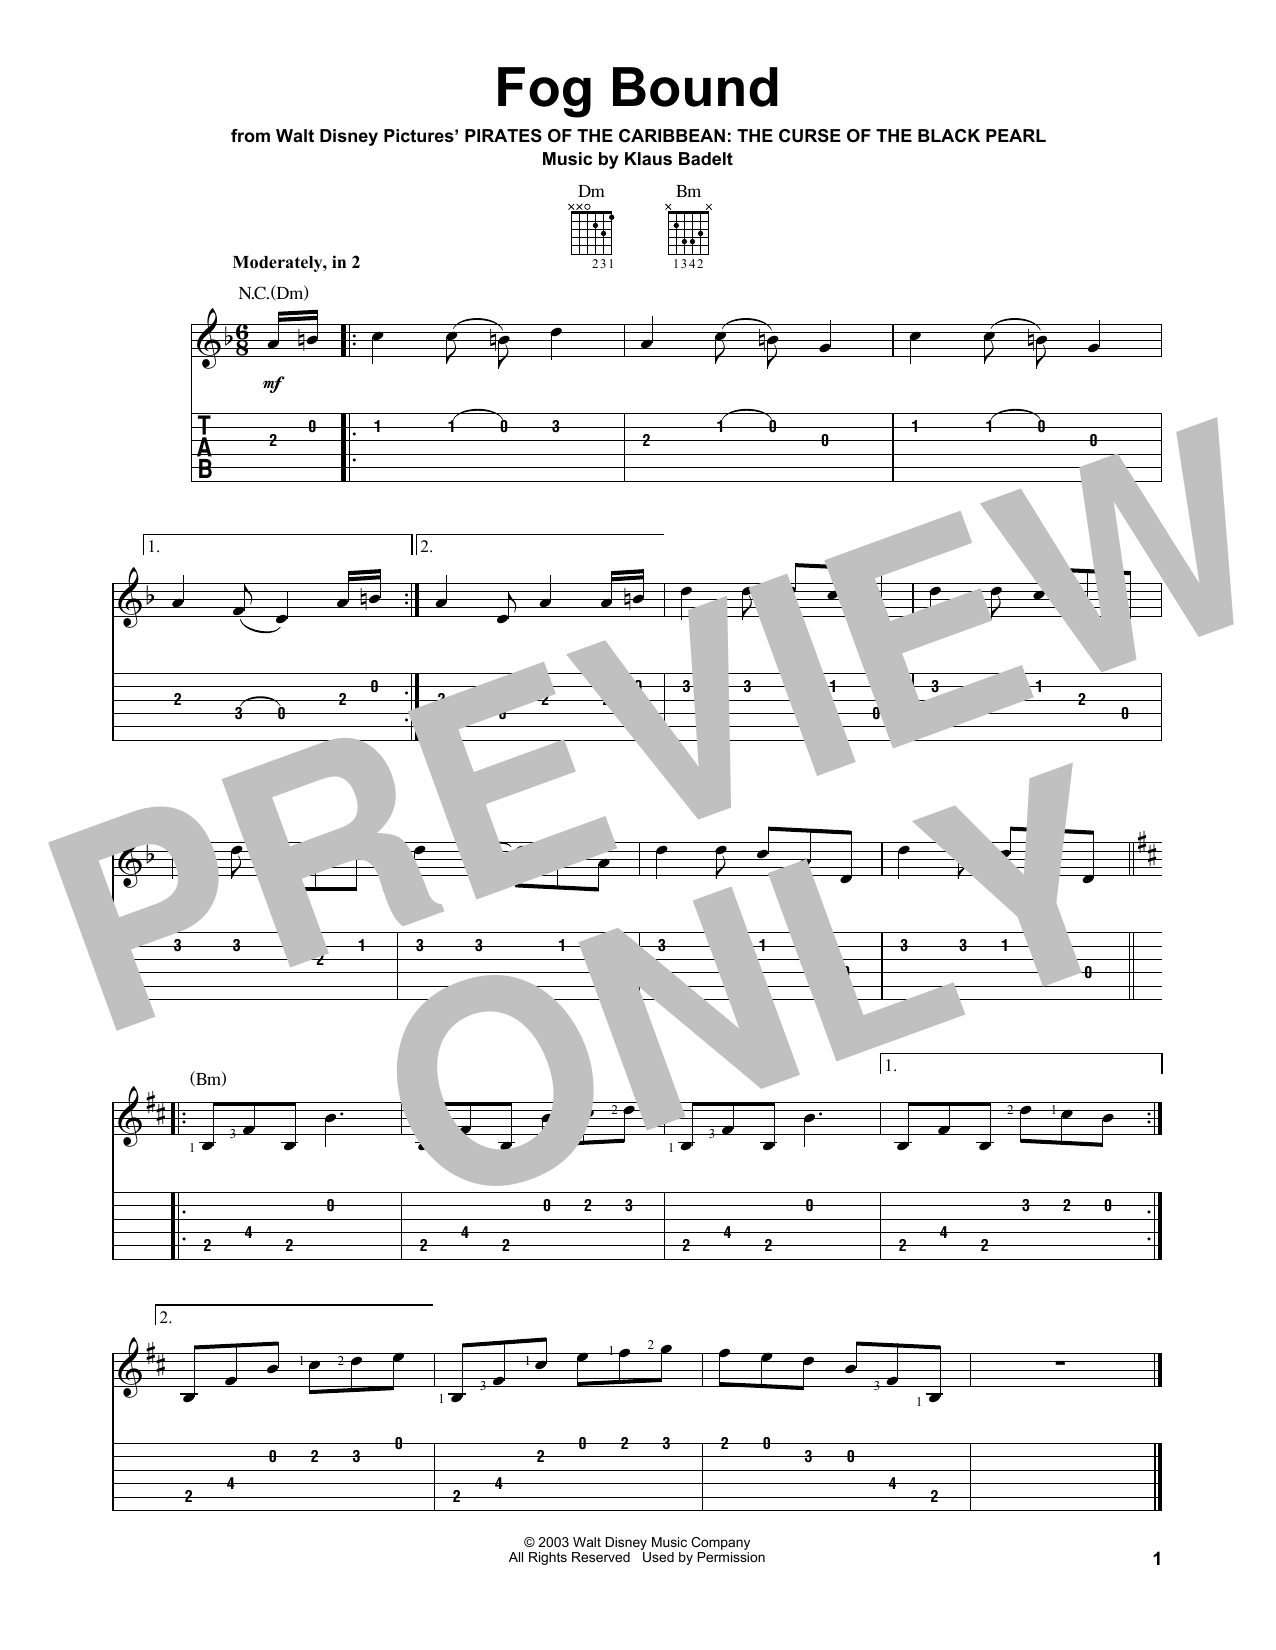 Klaus Badelt Fog Bound Sheet Music Notes & Chords for Easy Guitar Tab - Download or Print PDF